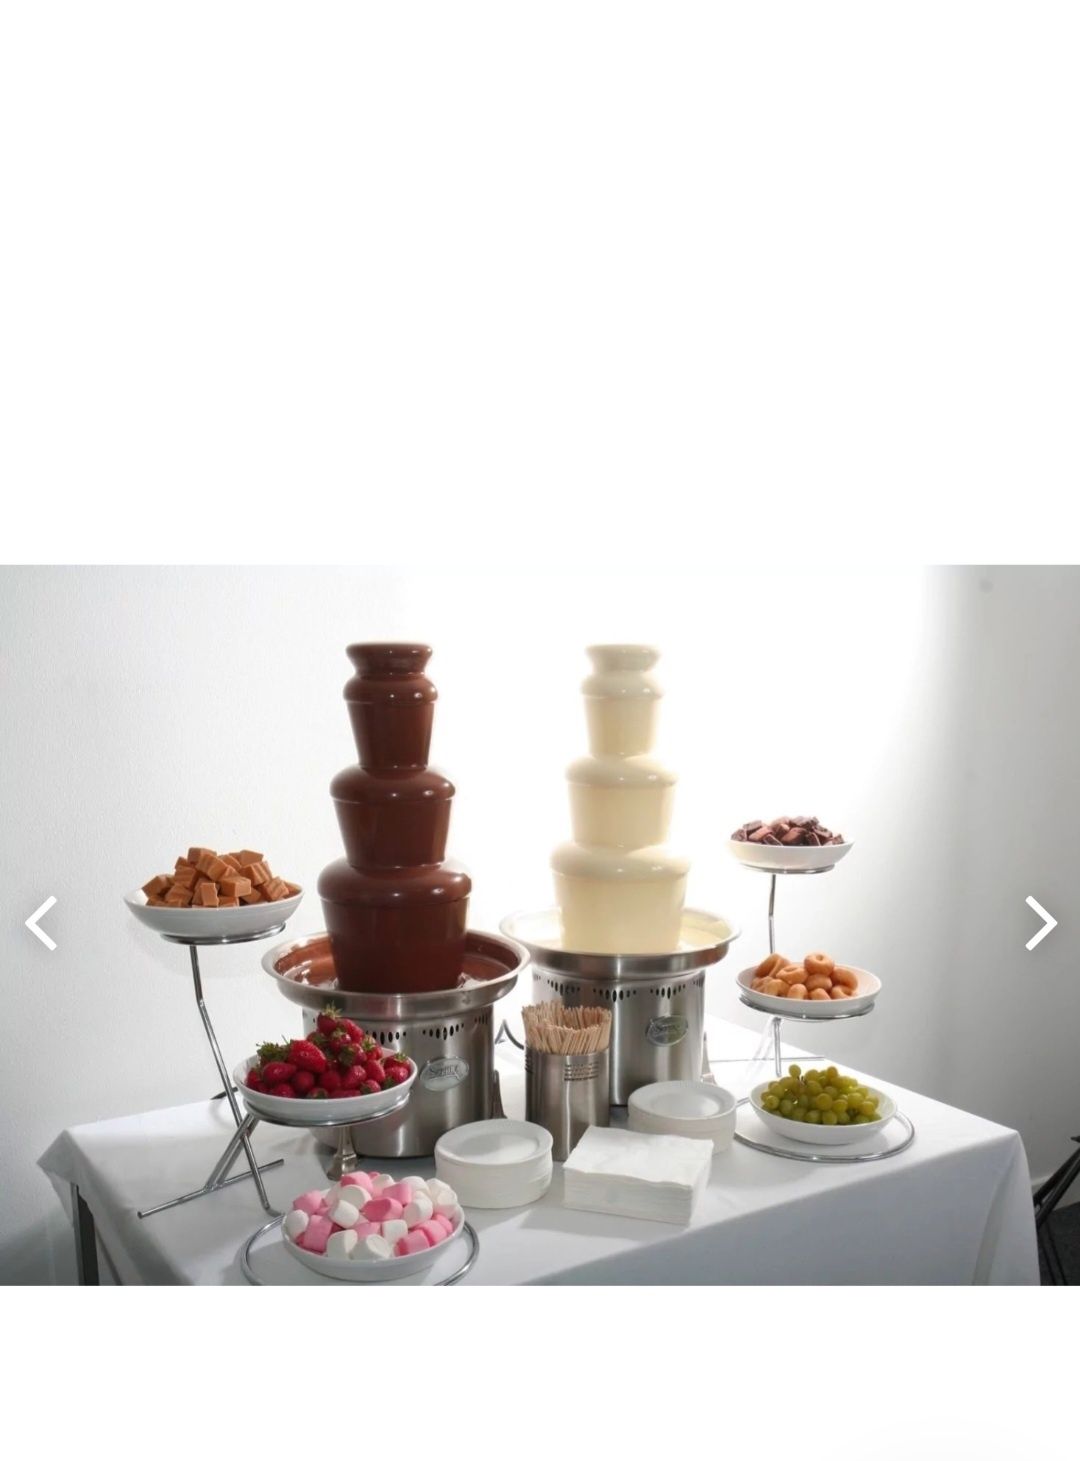 Шоколадный фонтан, Chocolate fondue fountain